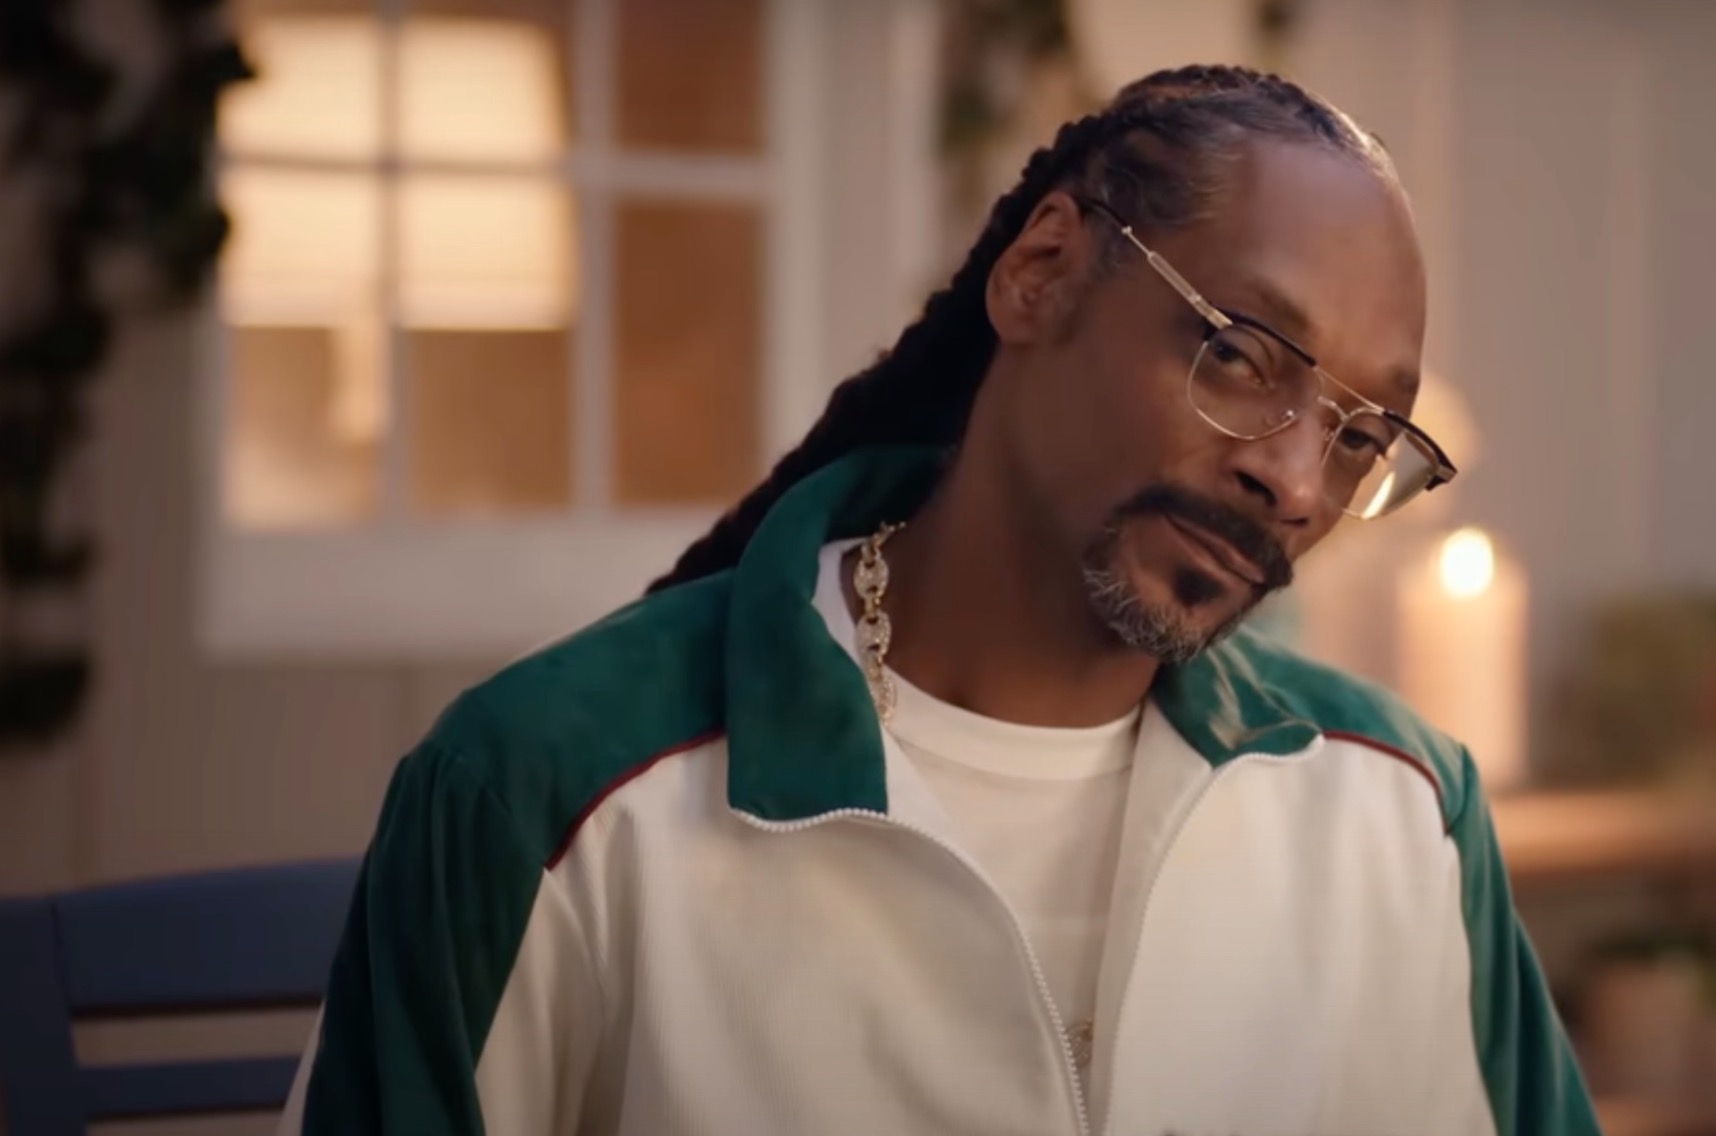 BIC met le feu avec Snoop Dogg